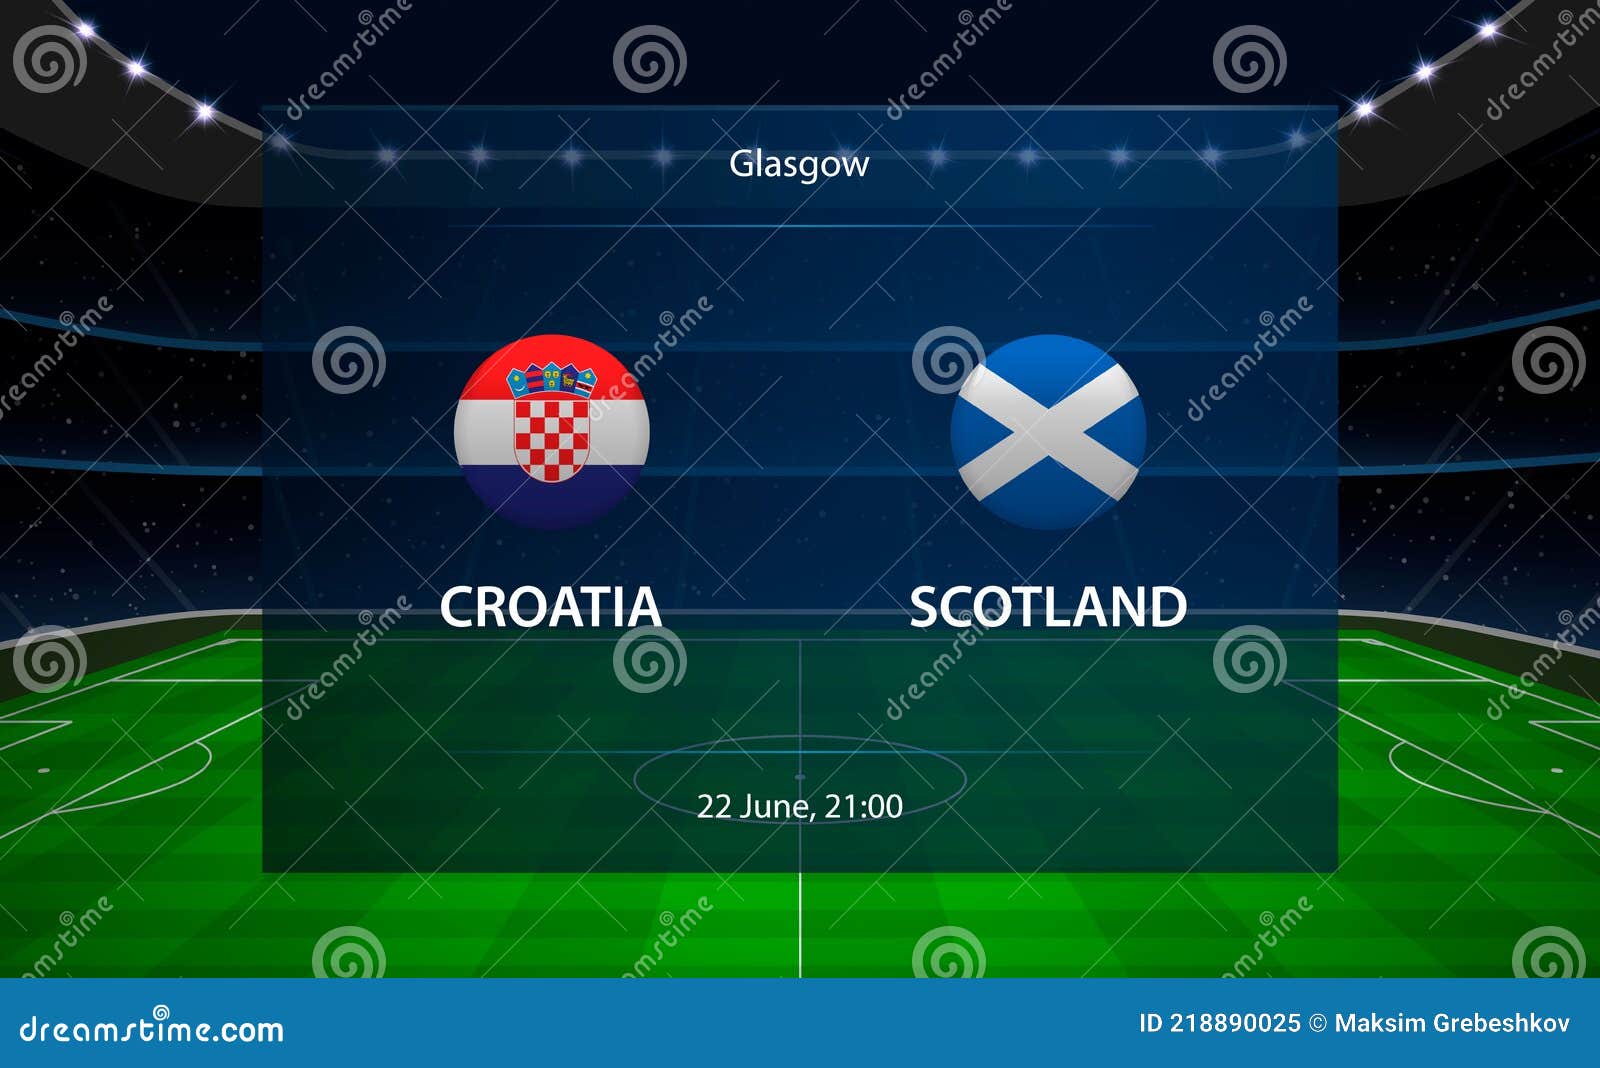 Croatia vs scotland